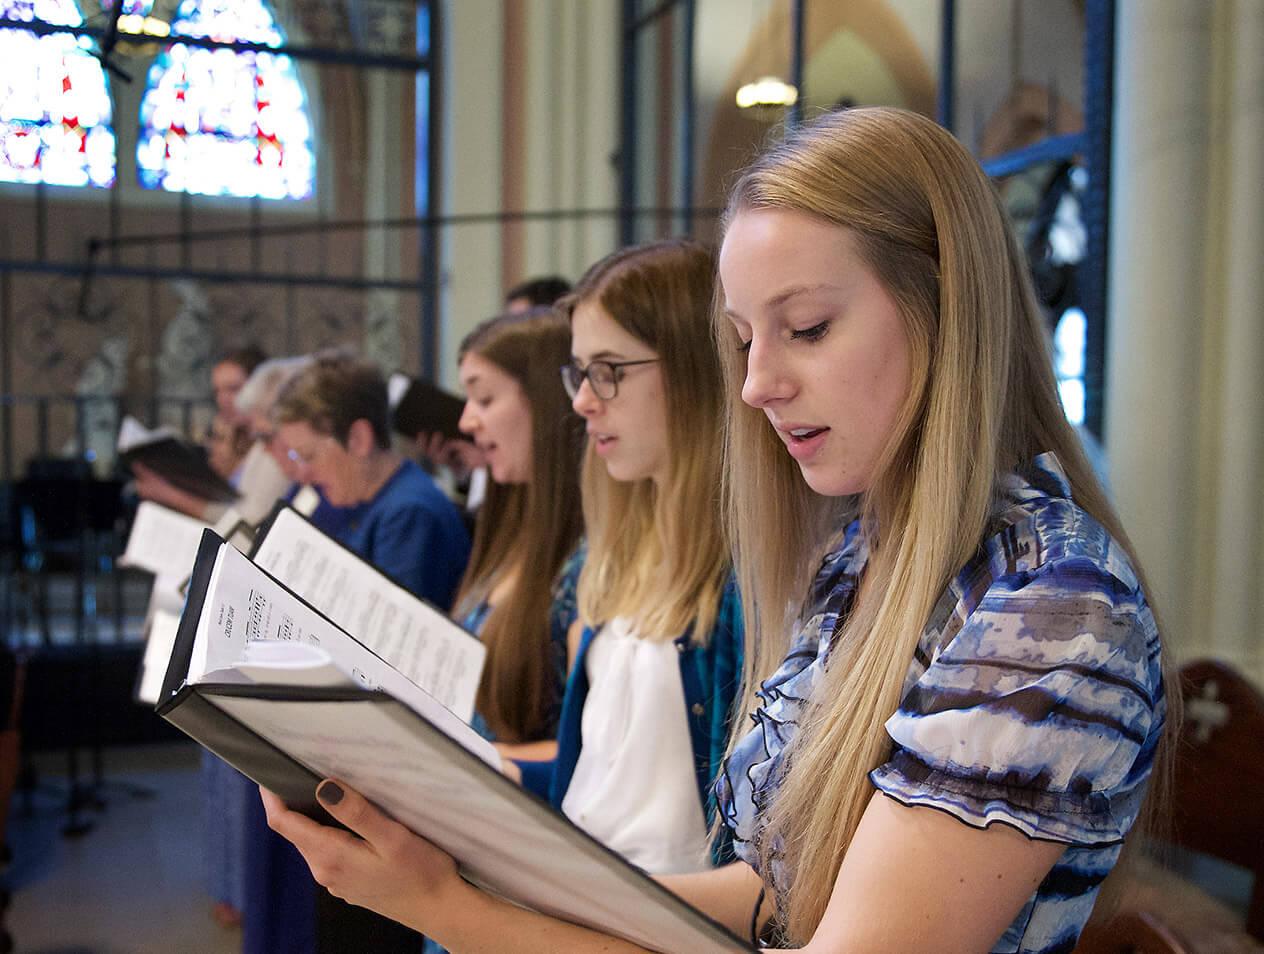 Choir members singing during Mass